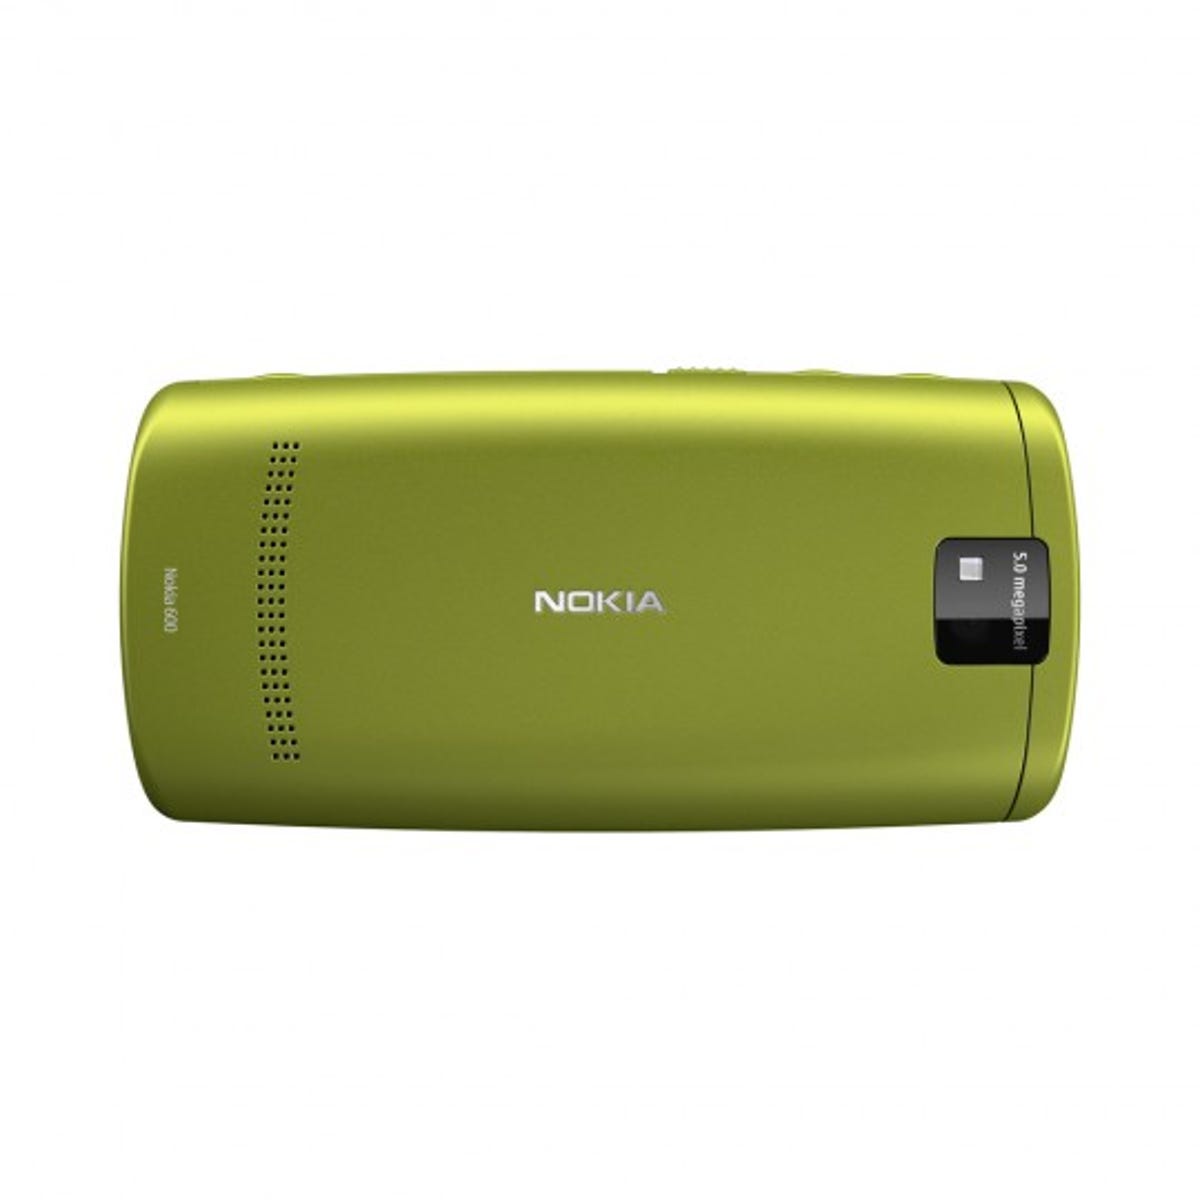 Nokia600_2-540x540.jpg